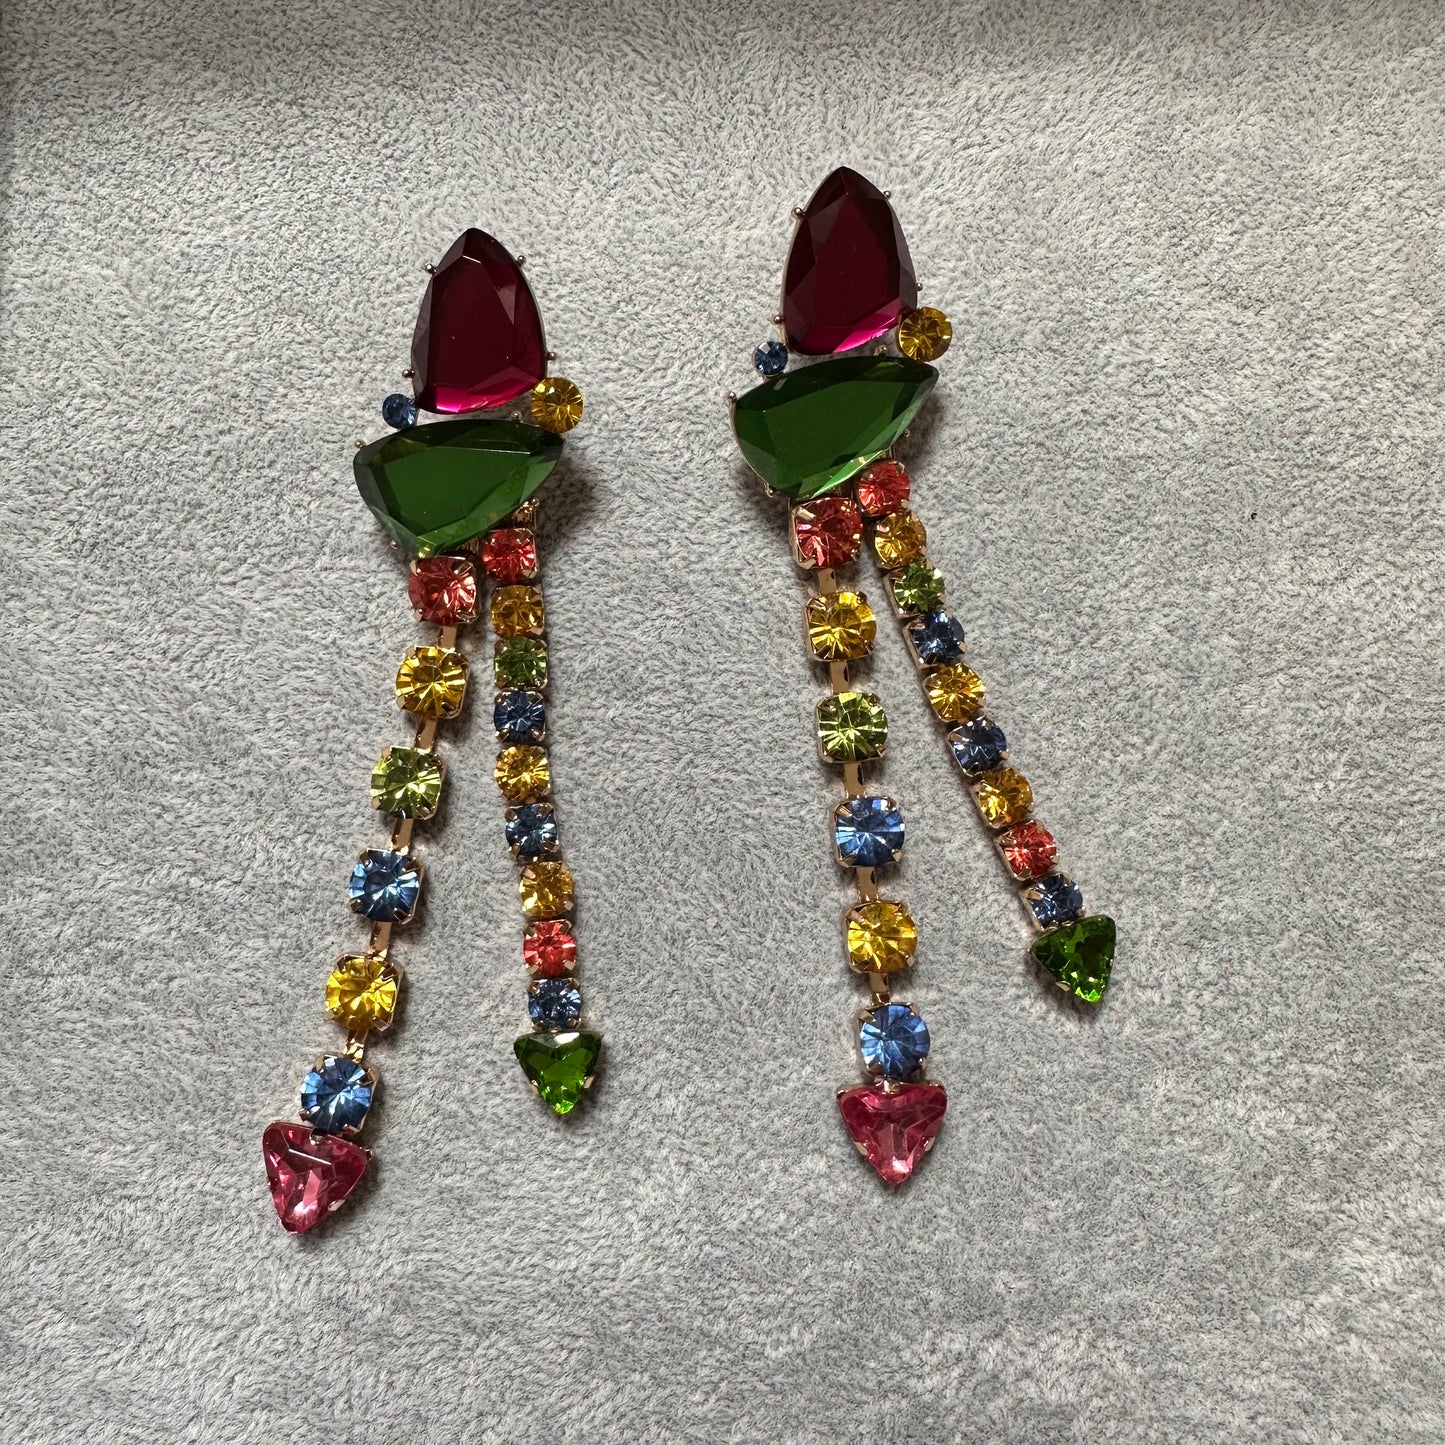 Erika Williner Designs - Audrey earrings